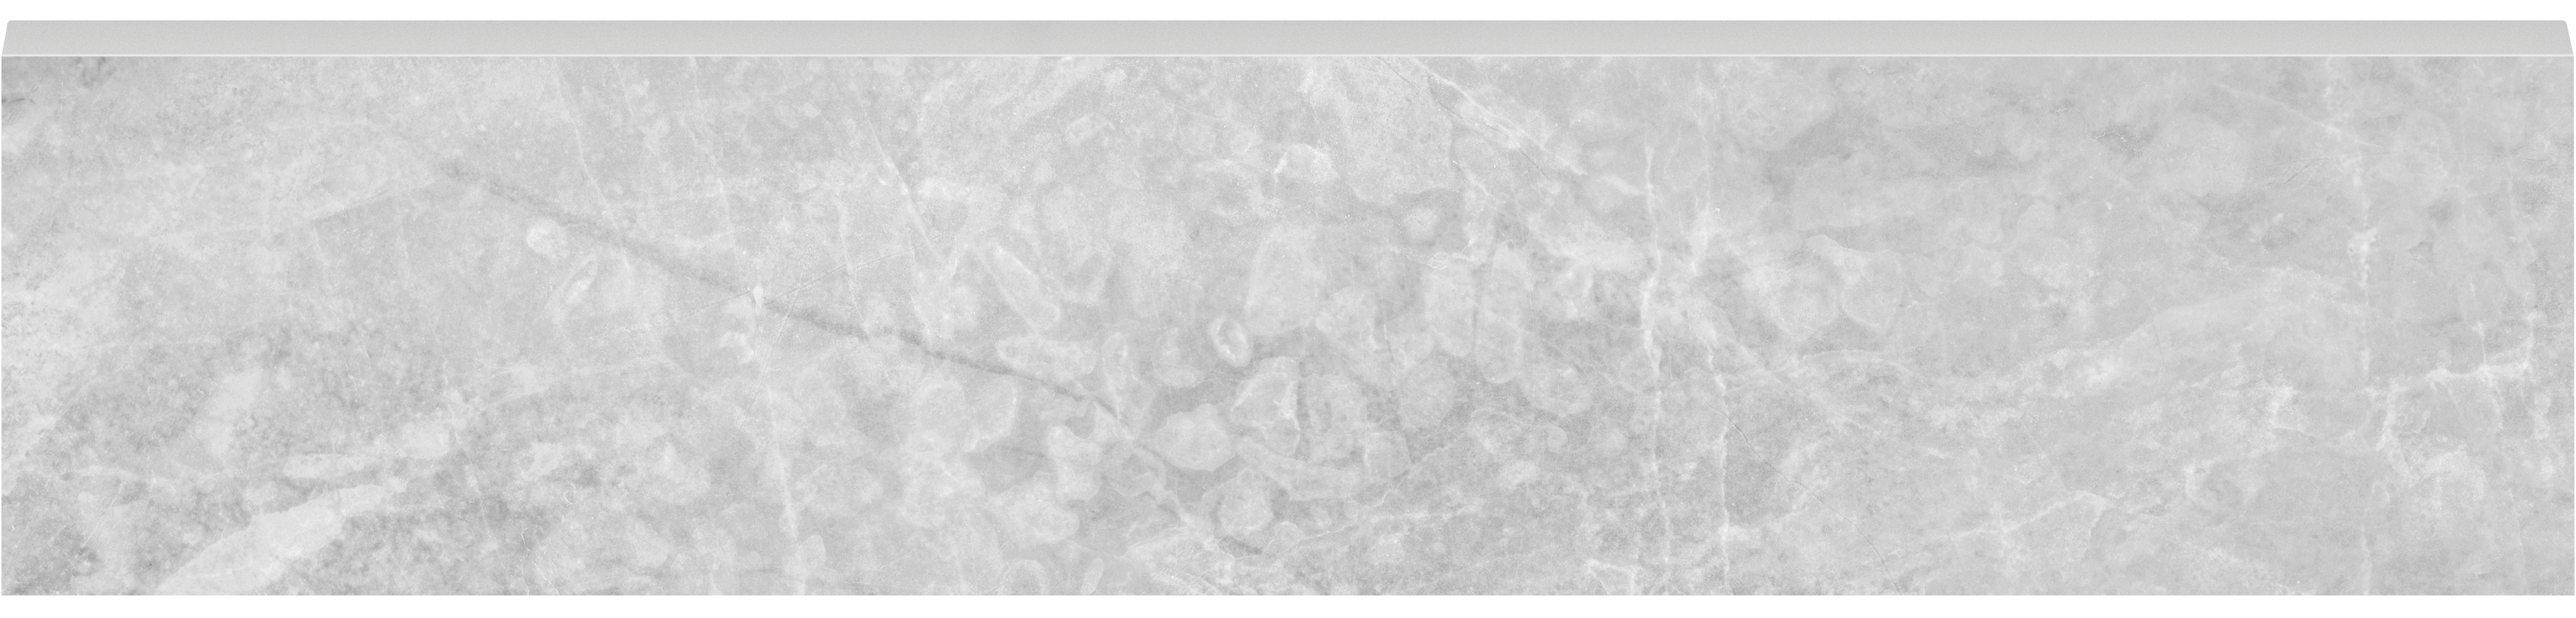 perla grigia pattern glazed porcelain bullnose molding from plata anatolia collection distributed by surface group international polished finish straight edge edge 3x12 bar shape